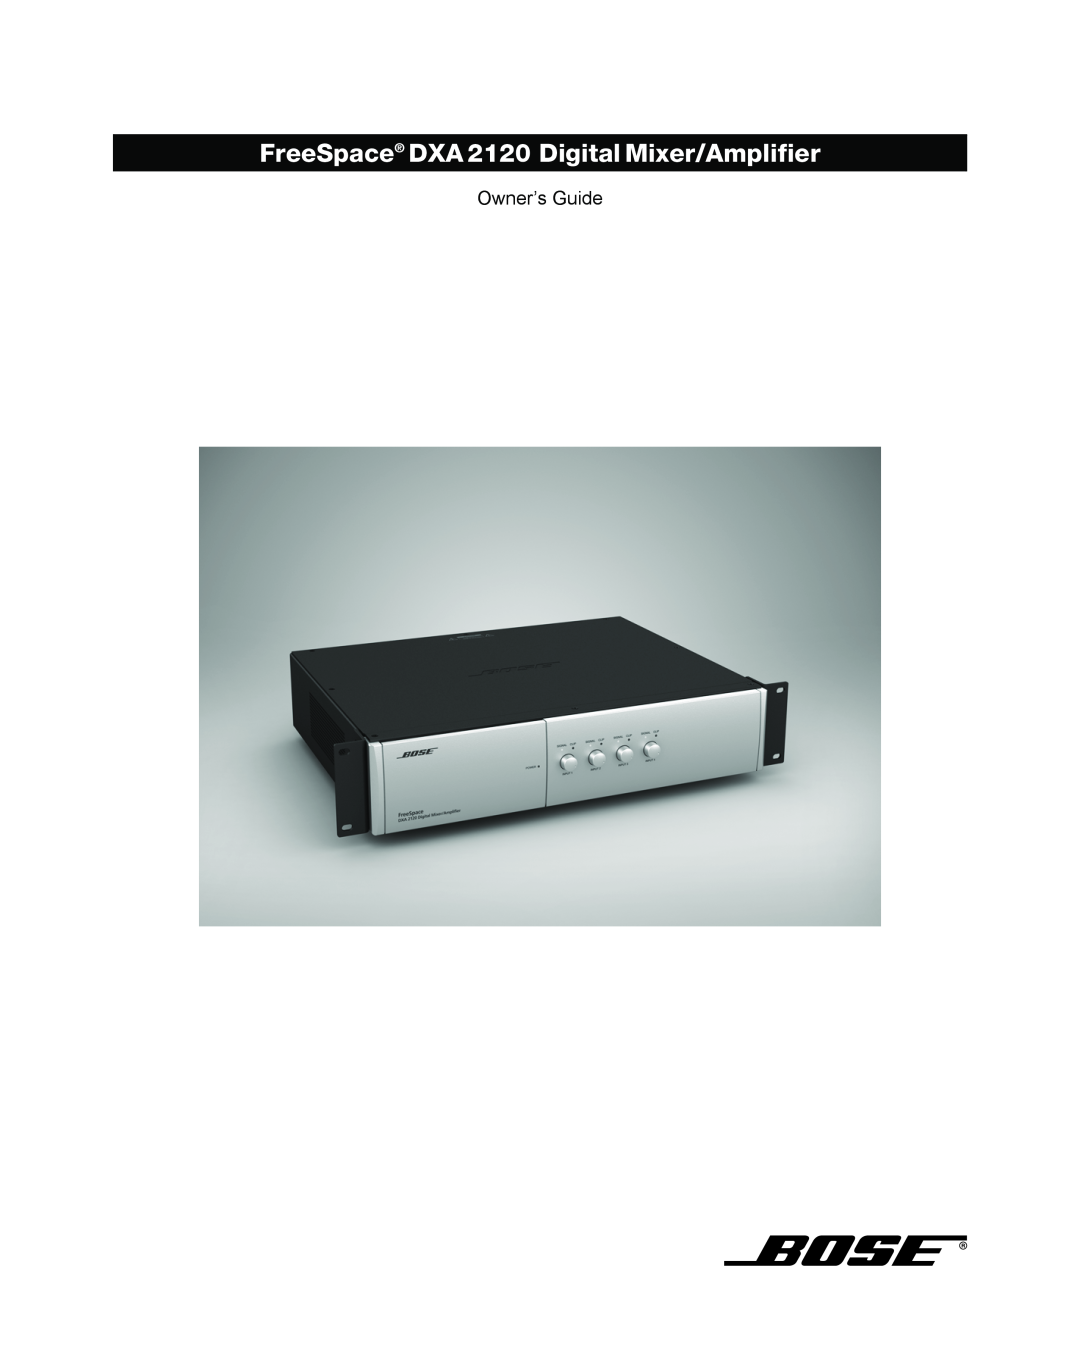 Bose DXA2120 manual Owner’s Guide, FreeSpace DXA 2120 Digital Mixer/Amplifier 